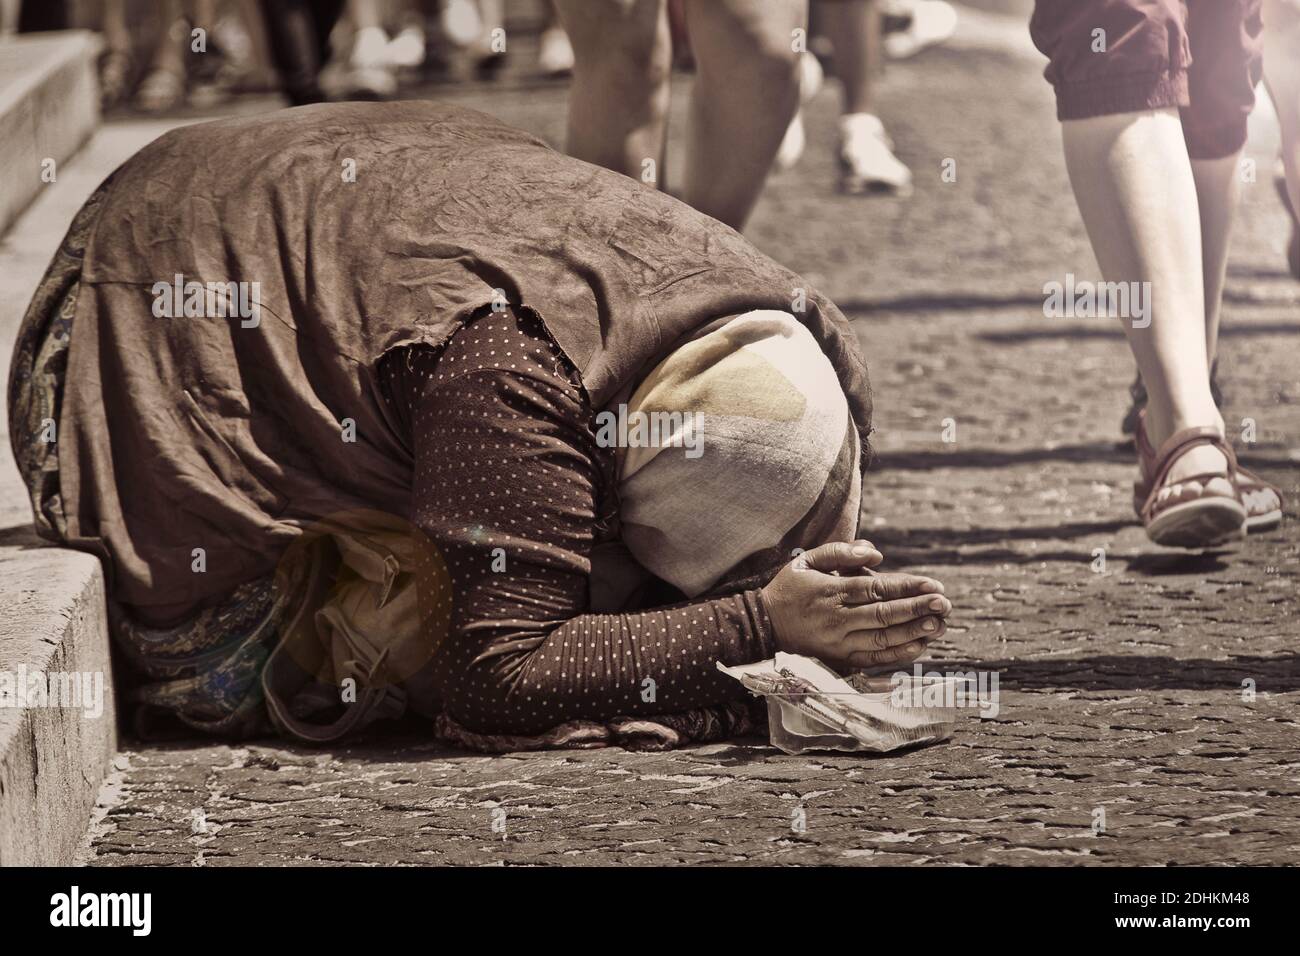 ATENAS, GREECE - Jan 21, 2015: WOMAN ASKING FOR MONEY ON THE STREET Stock Photo